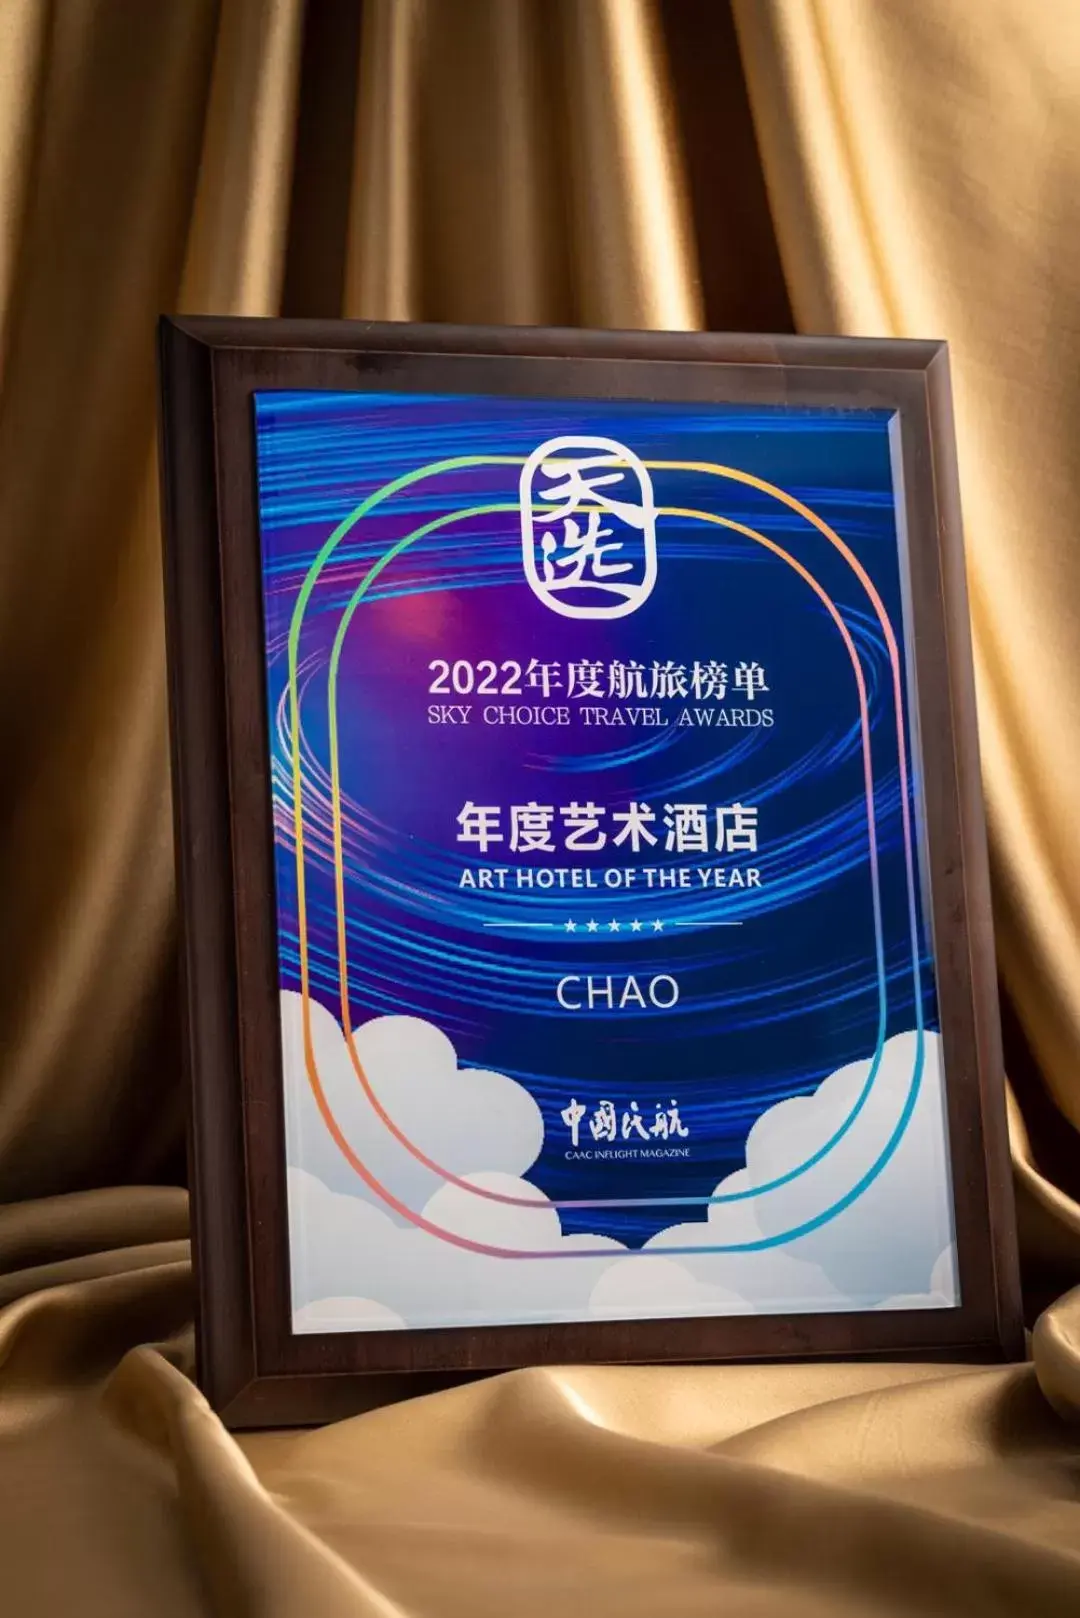 Certificate/Award in CHAO Sanlitun Beijing